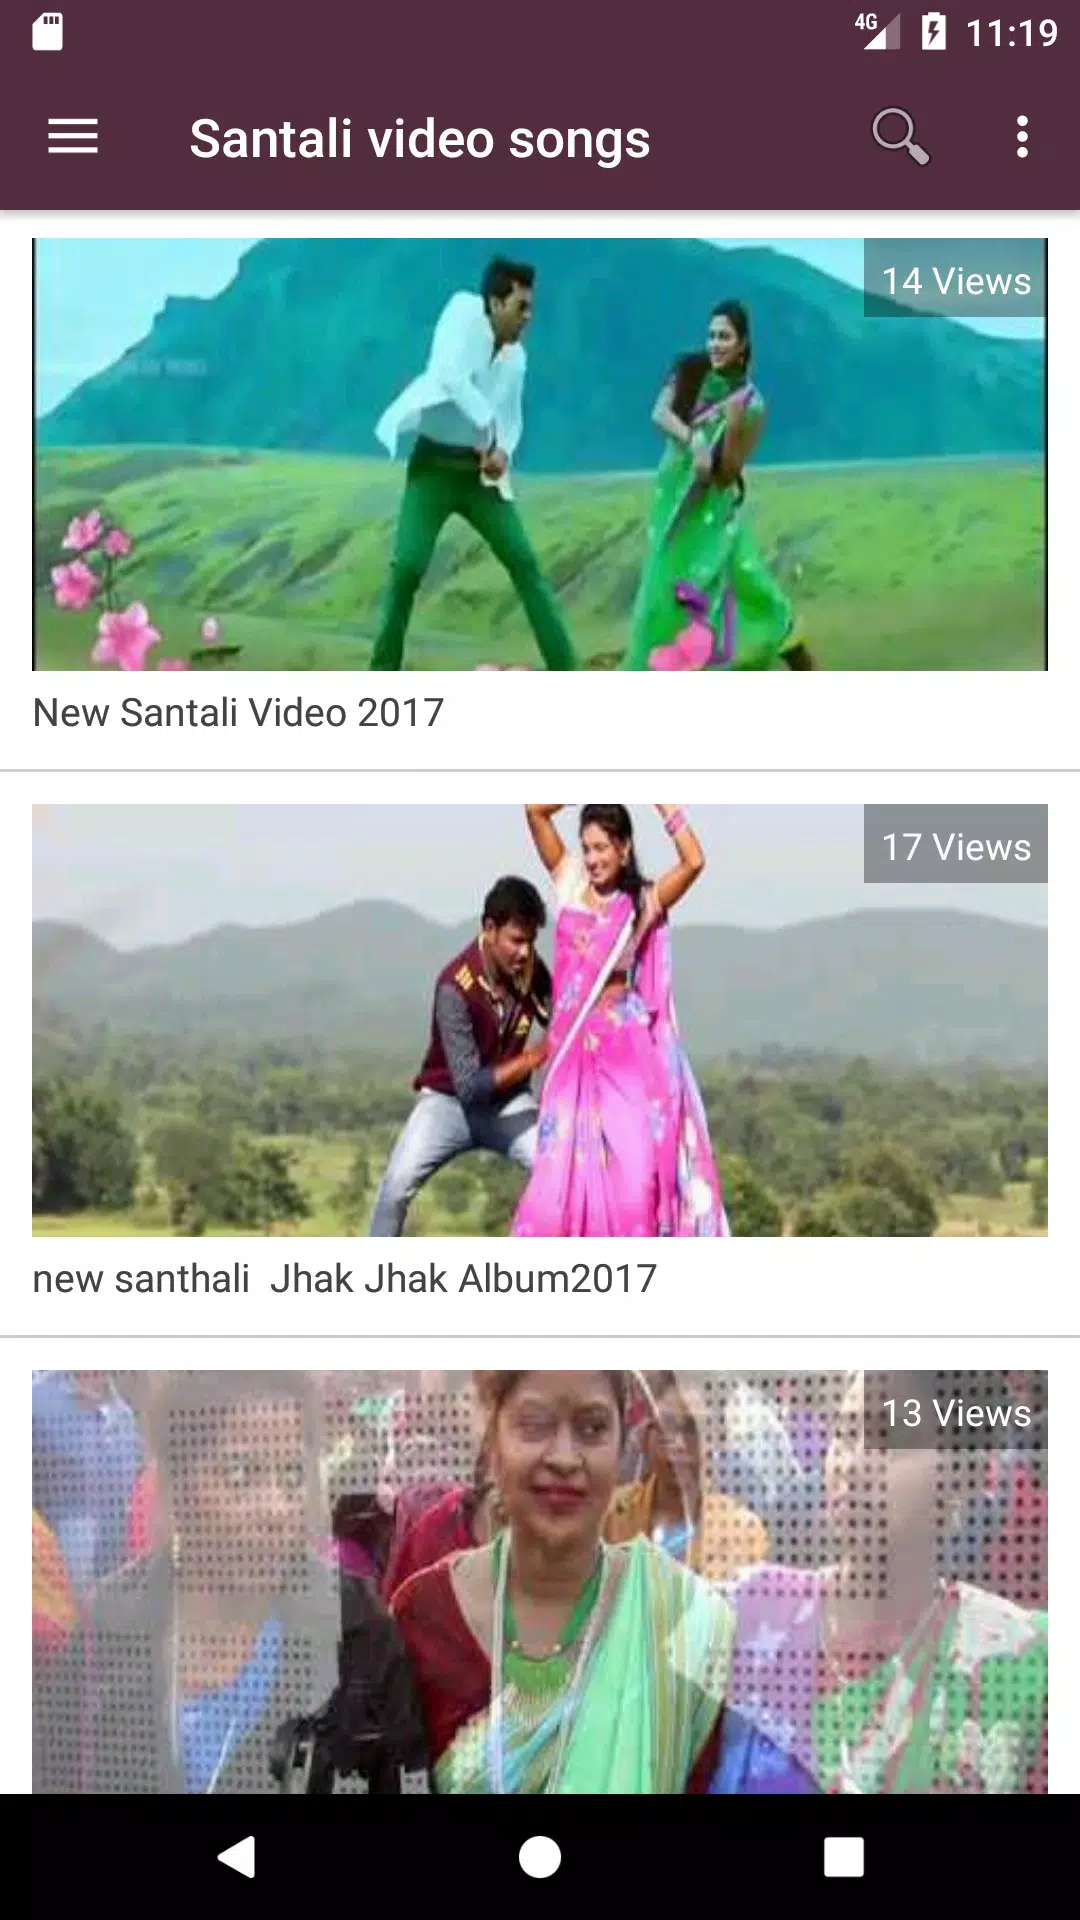 Santali Videos-Santali Song,Santali Comedy,Dj APK for Android Download